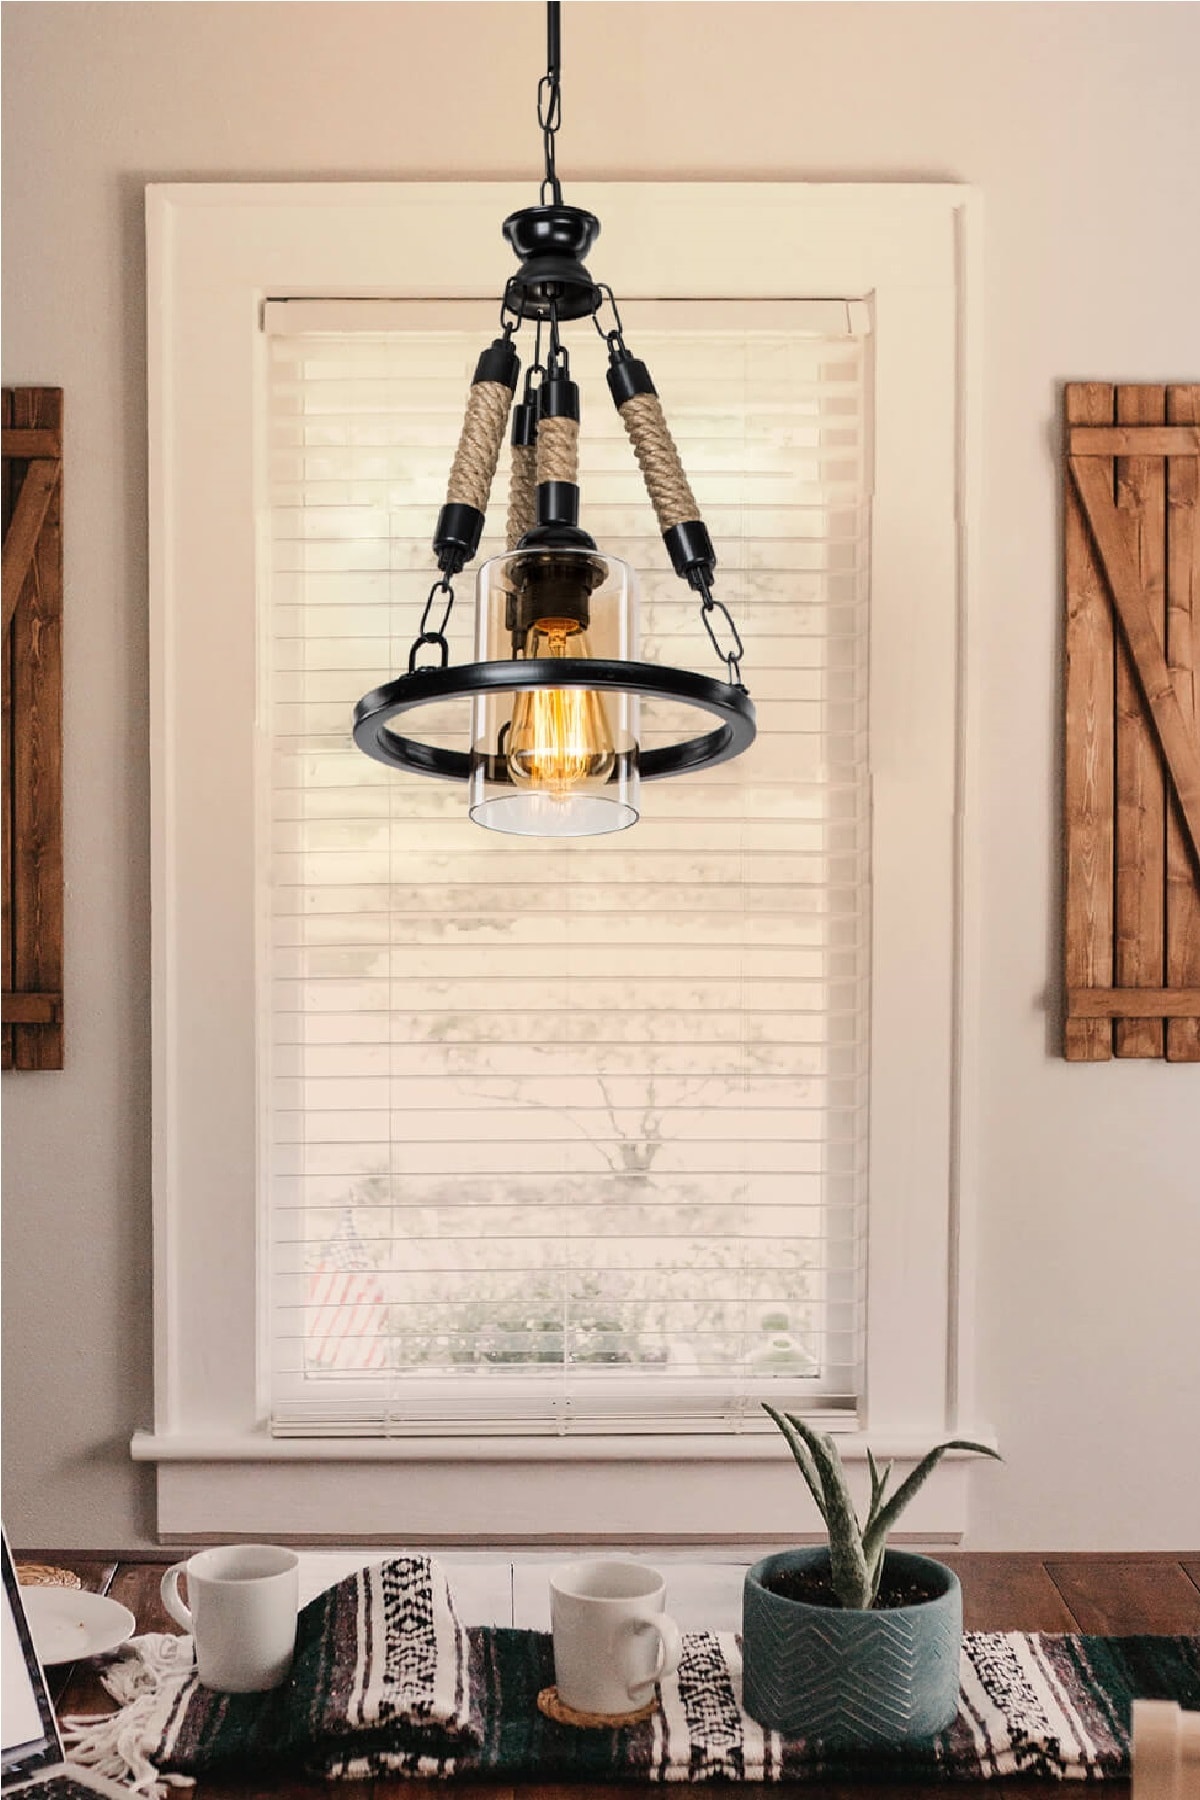 1-Light Pendant/Hanging Lamp